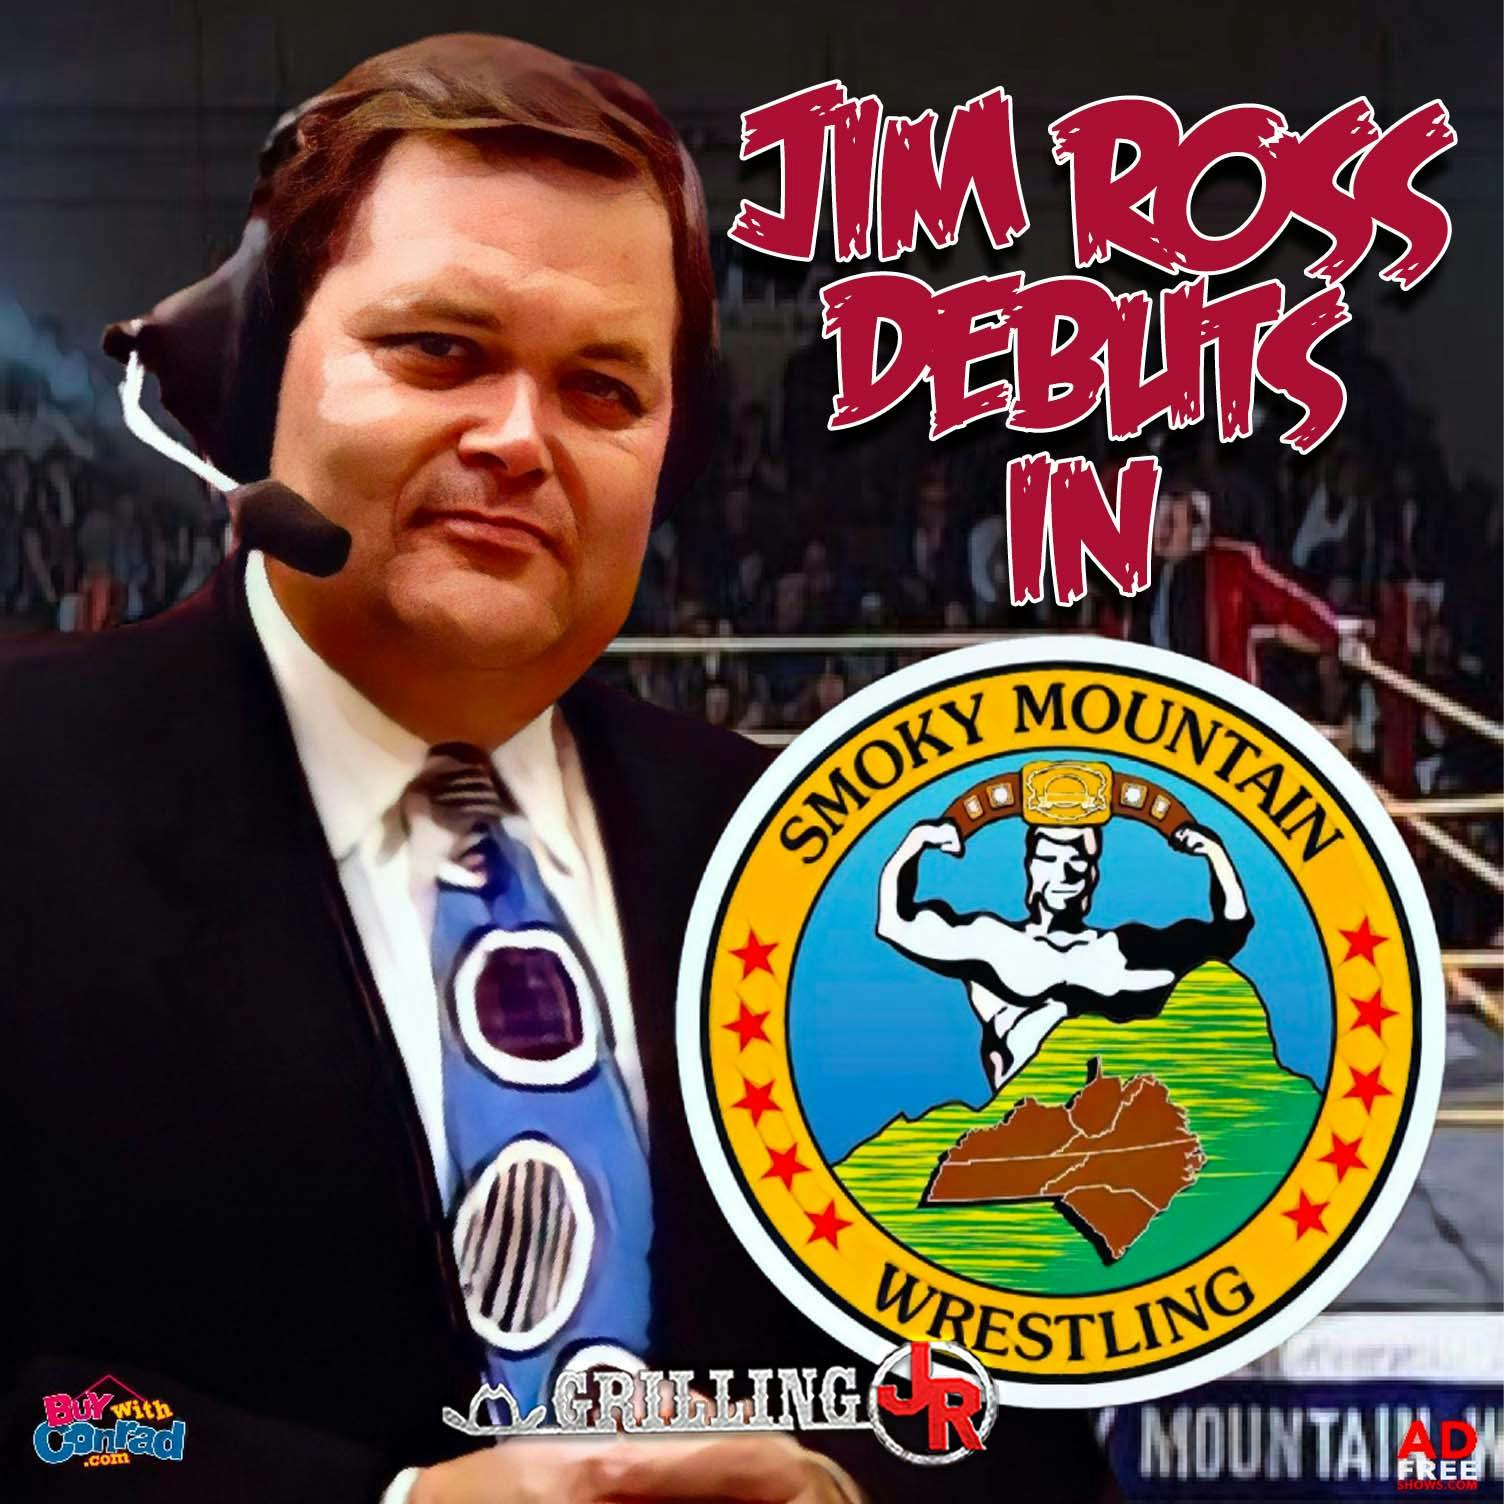 Episode 175: Jim Ross Debuts In Smoky Mountain Wrestling